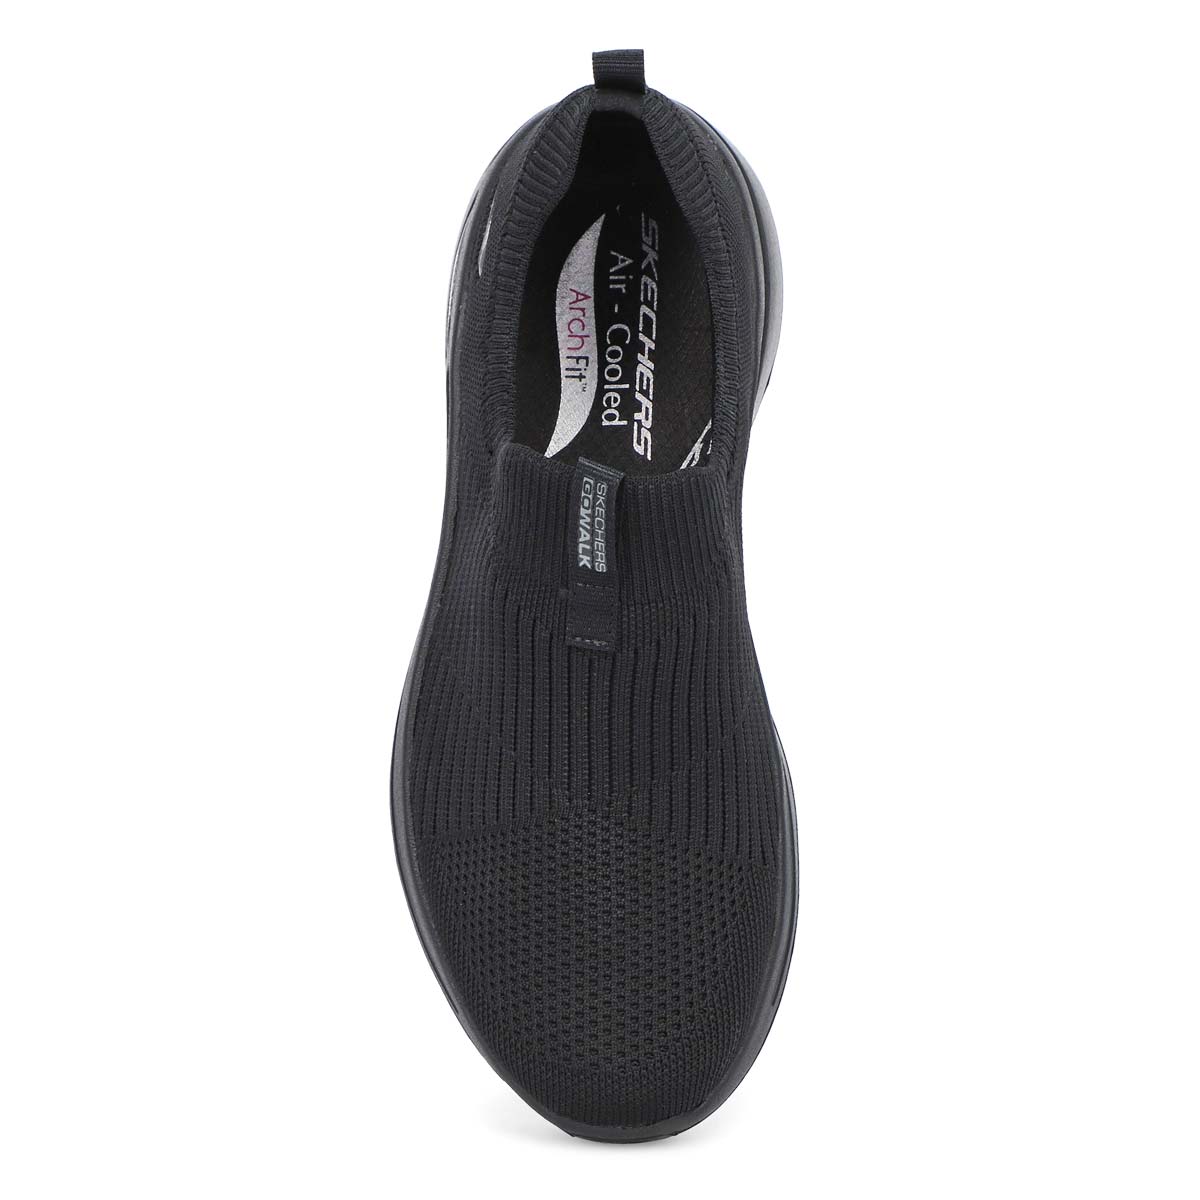 Skechers Women's Go Walk Arch Fit Iconic Shoe | SoftMoc.com